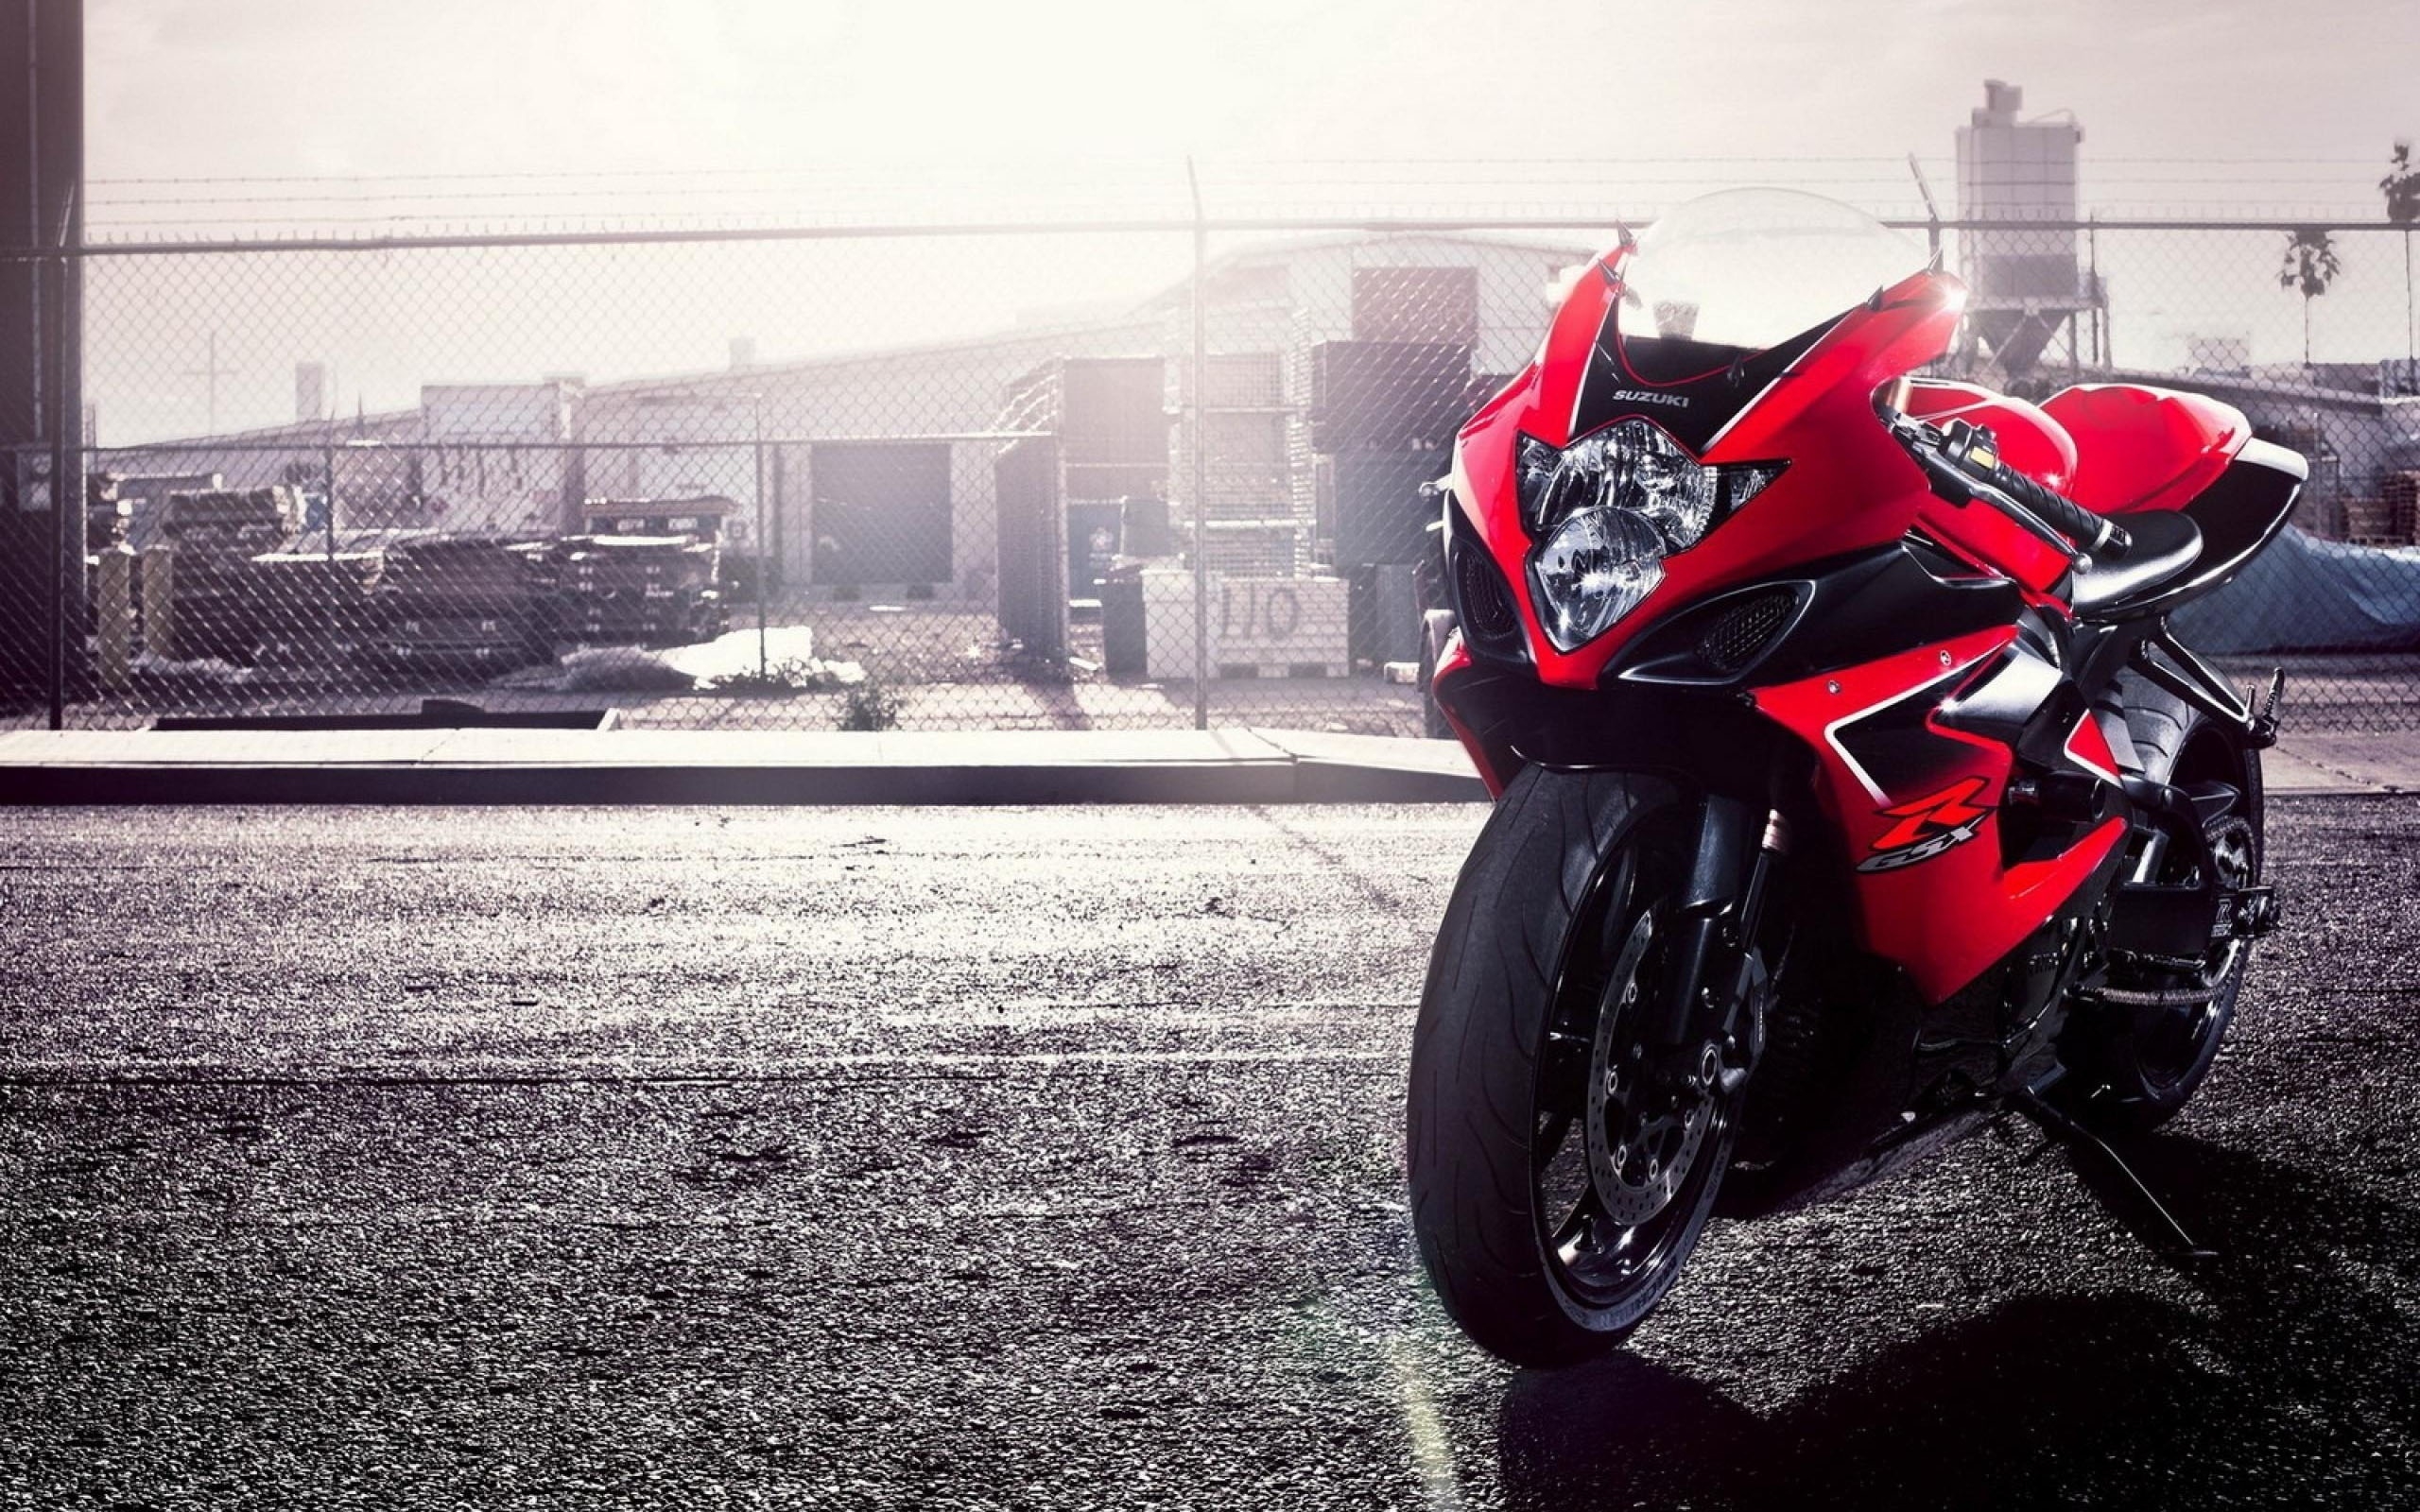 Suzuki Red for 2560 x 1600 widescreen resolution